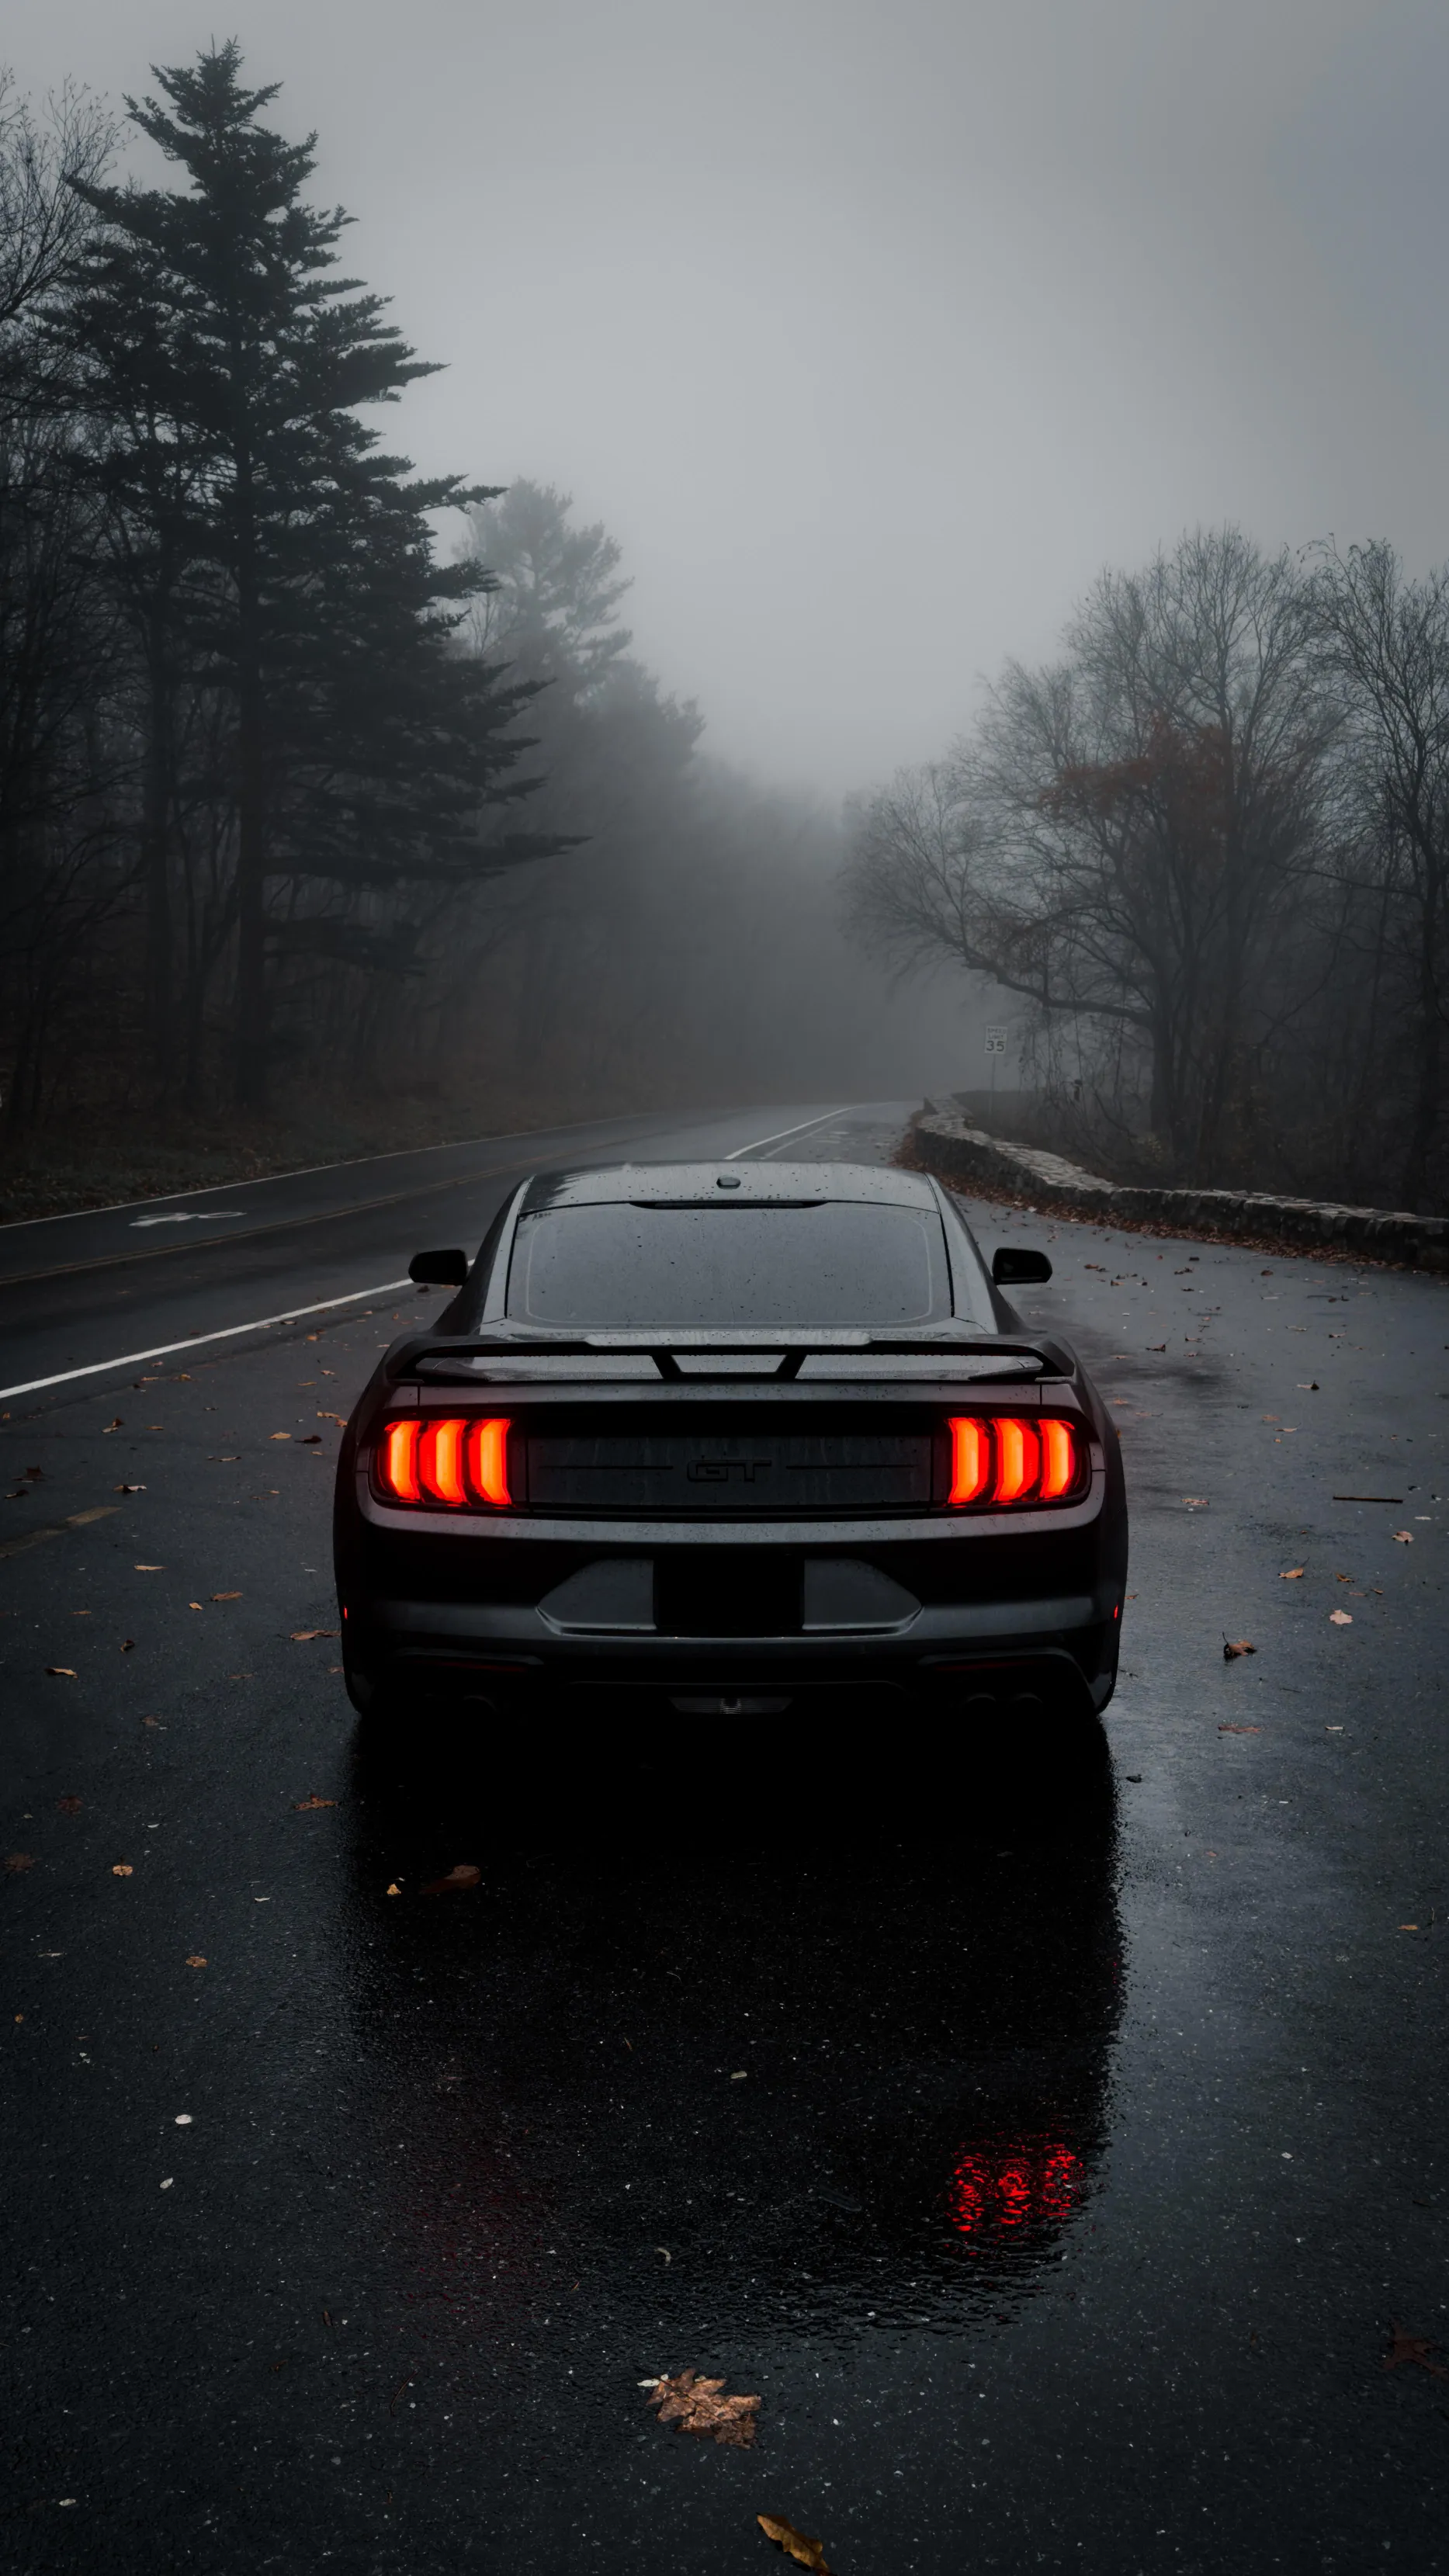 thumb for Dark Black Ford Mustang Wallpaper